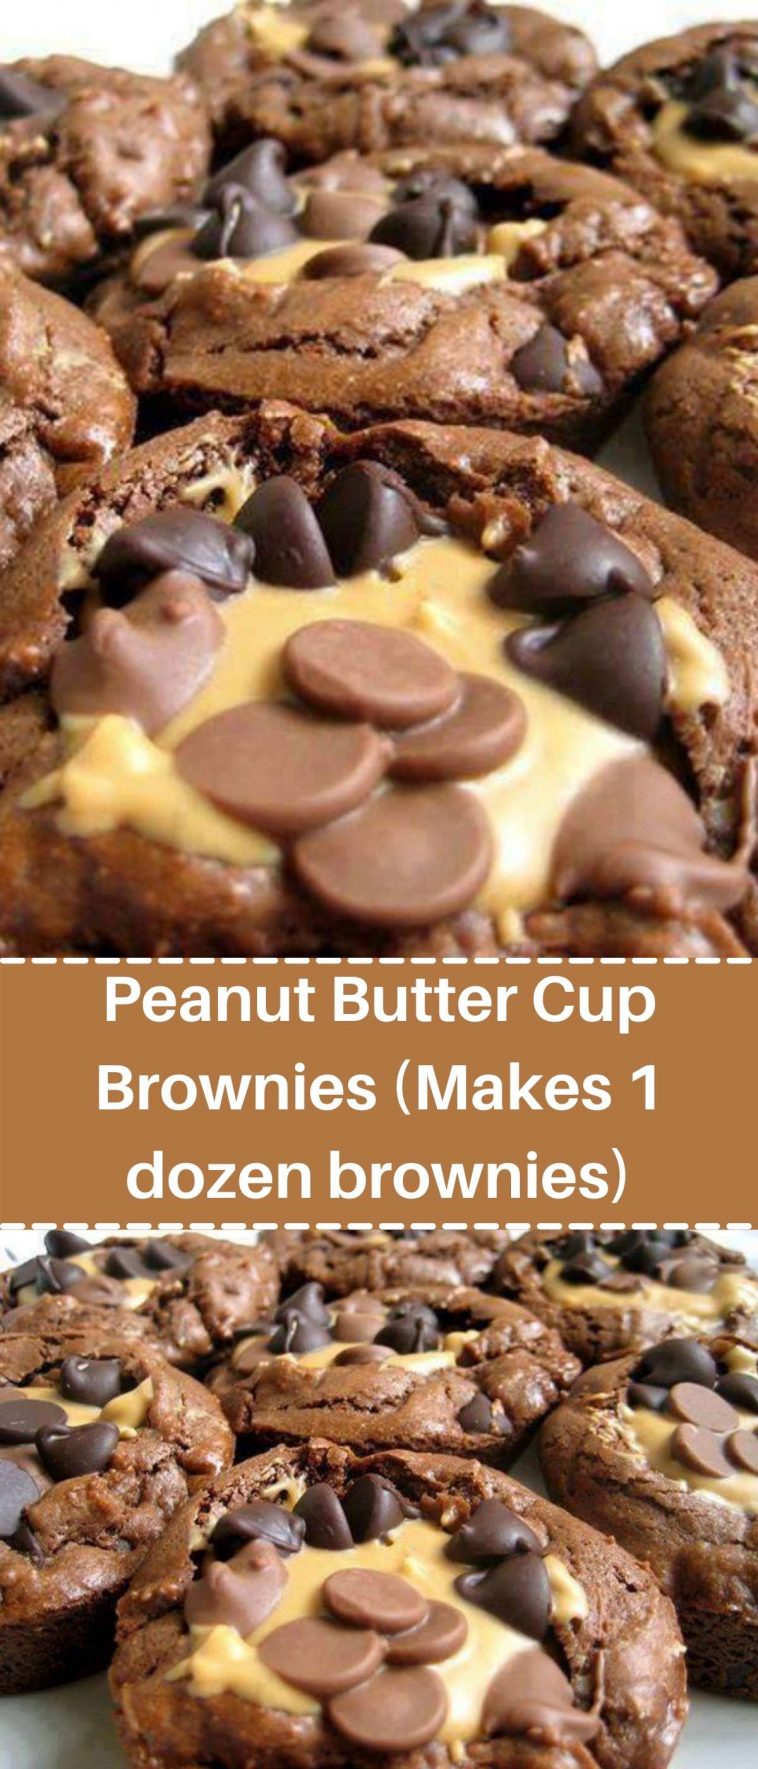 Peanut Butter Cup Brownies (Makes 1 dozen brownies)